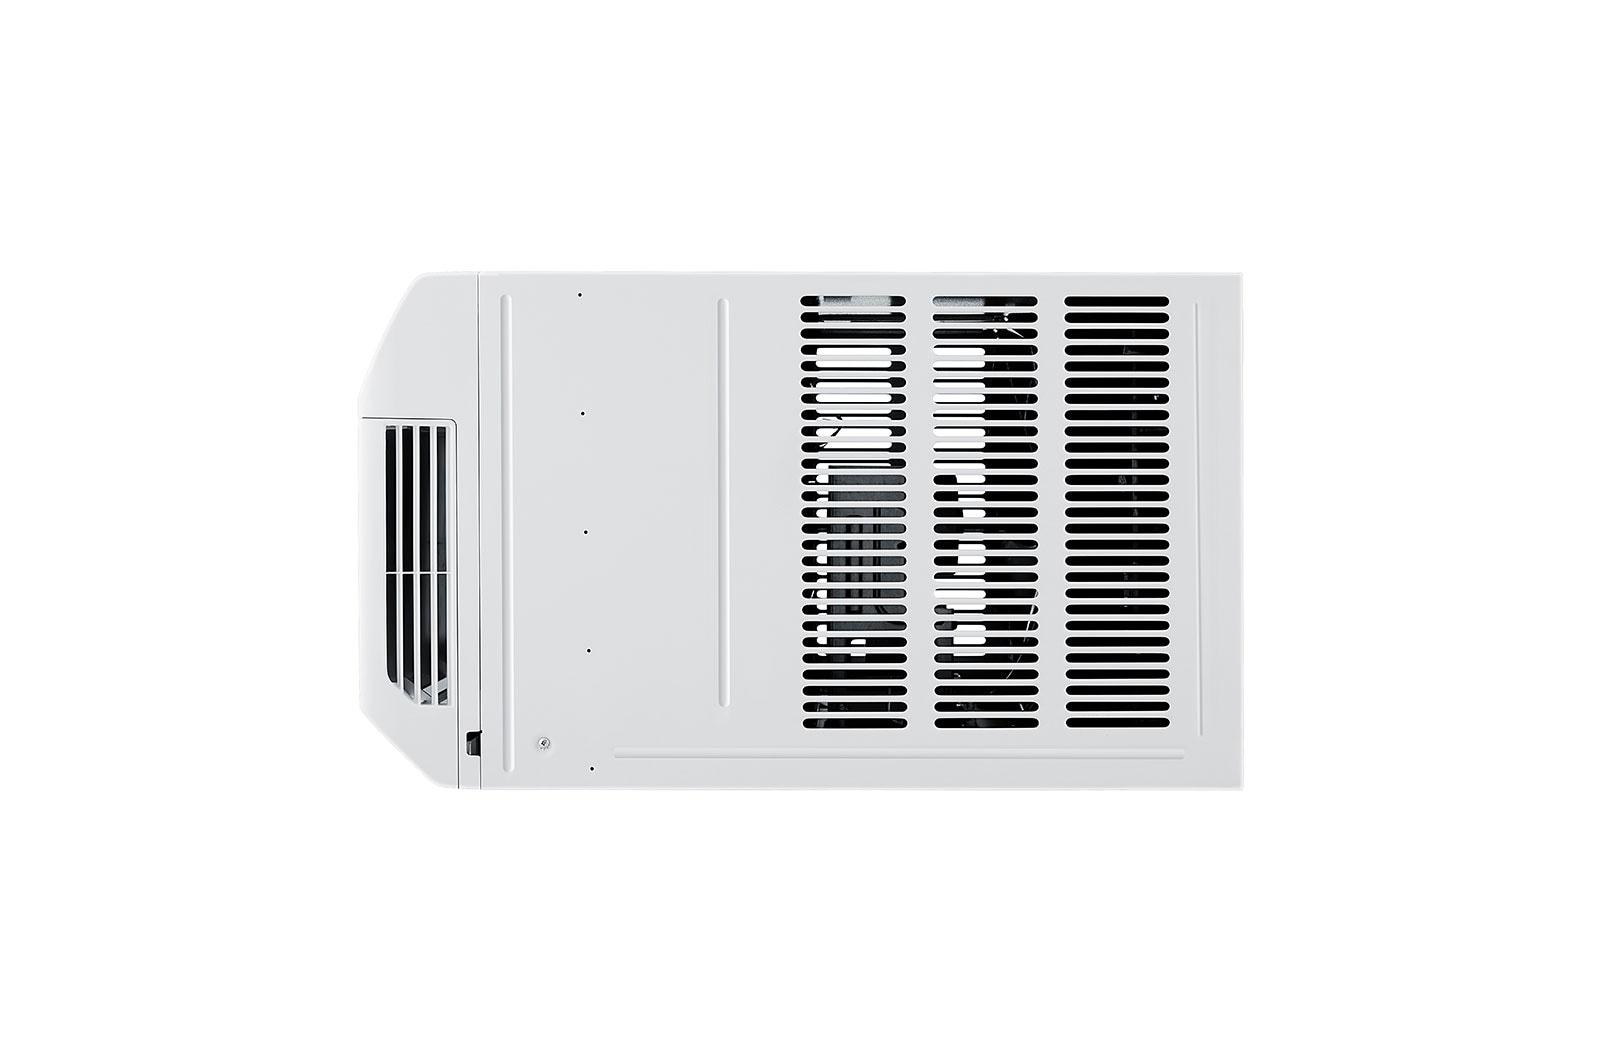 Lg 18,000 BTU DUAL Inverter Smart wi-fi Enabled Window Air Conditioner